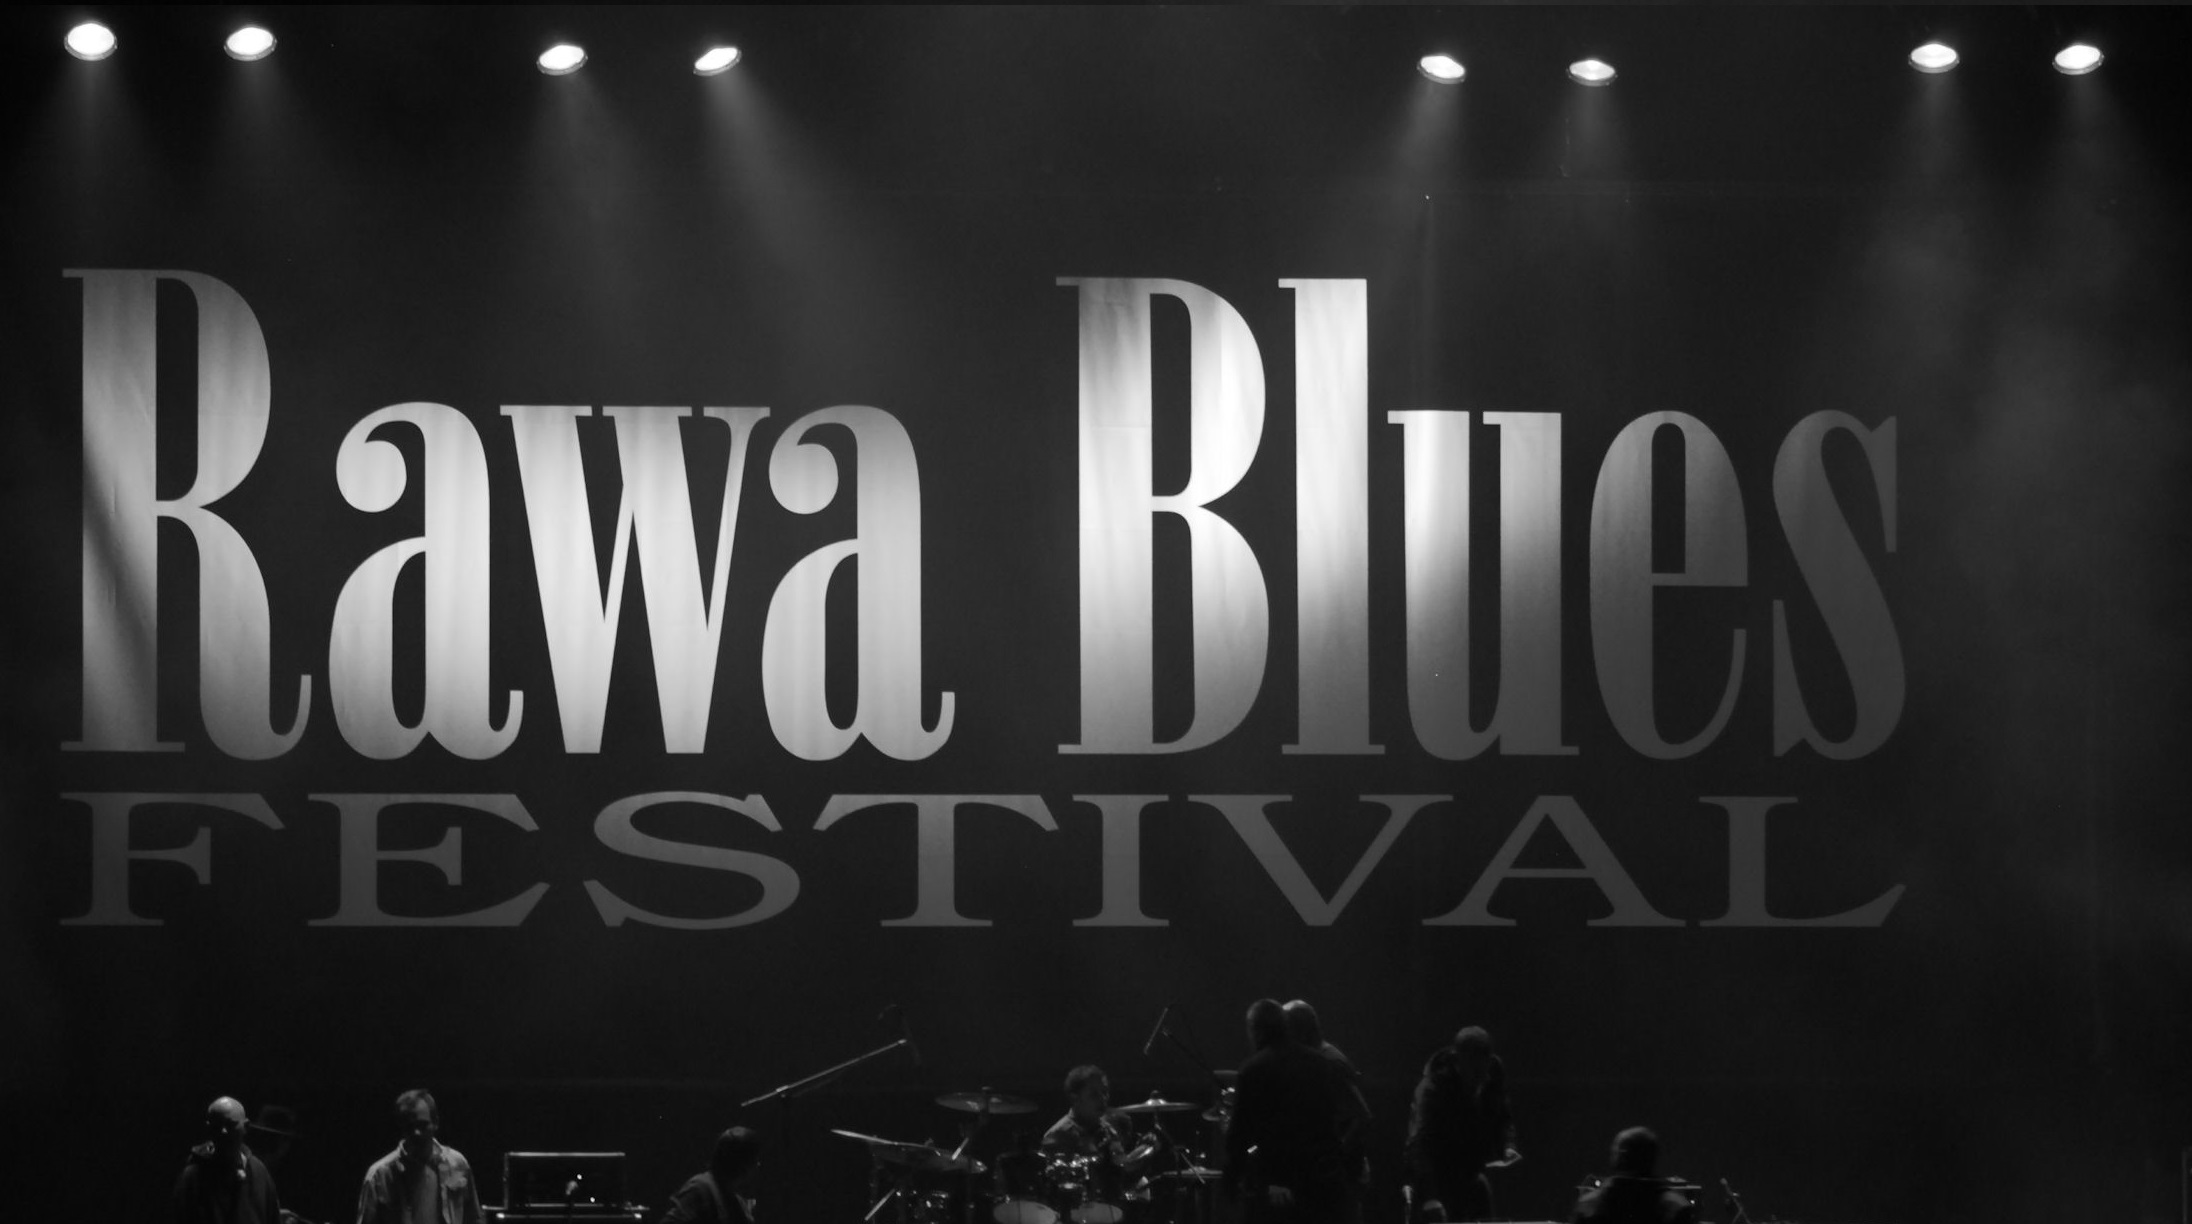 Rava-blues-festival